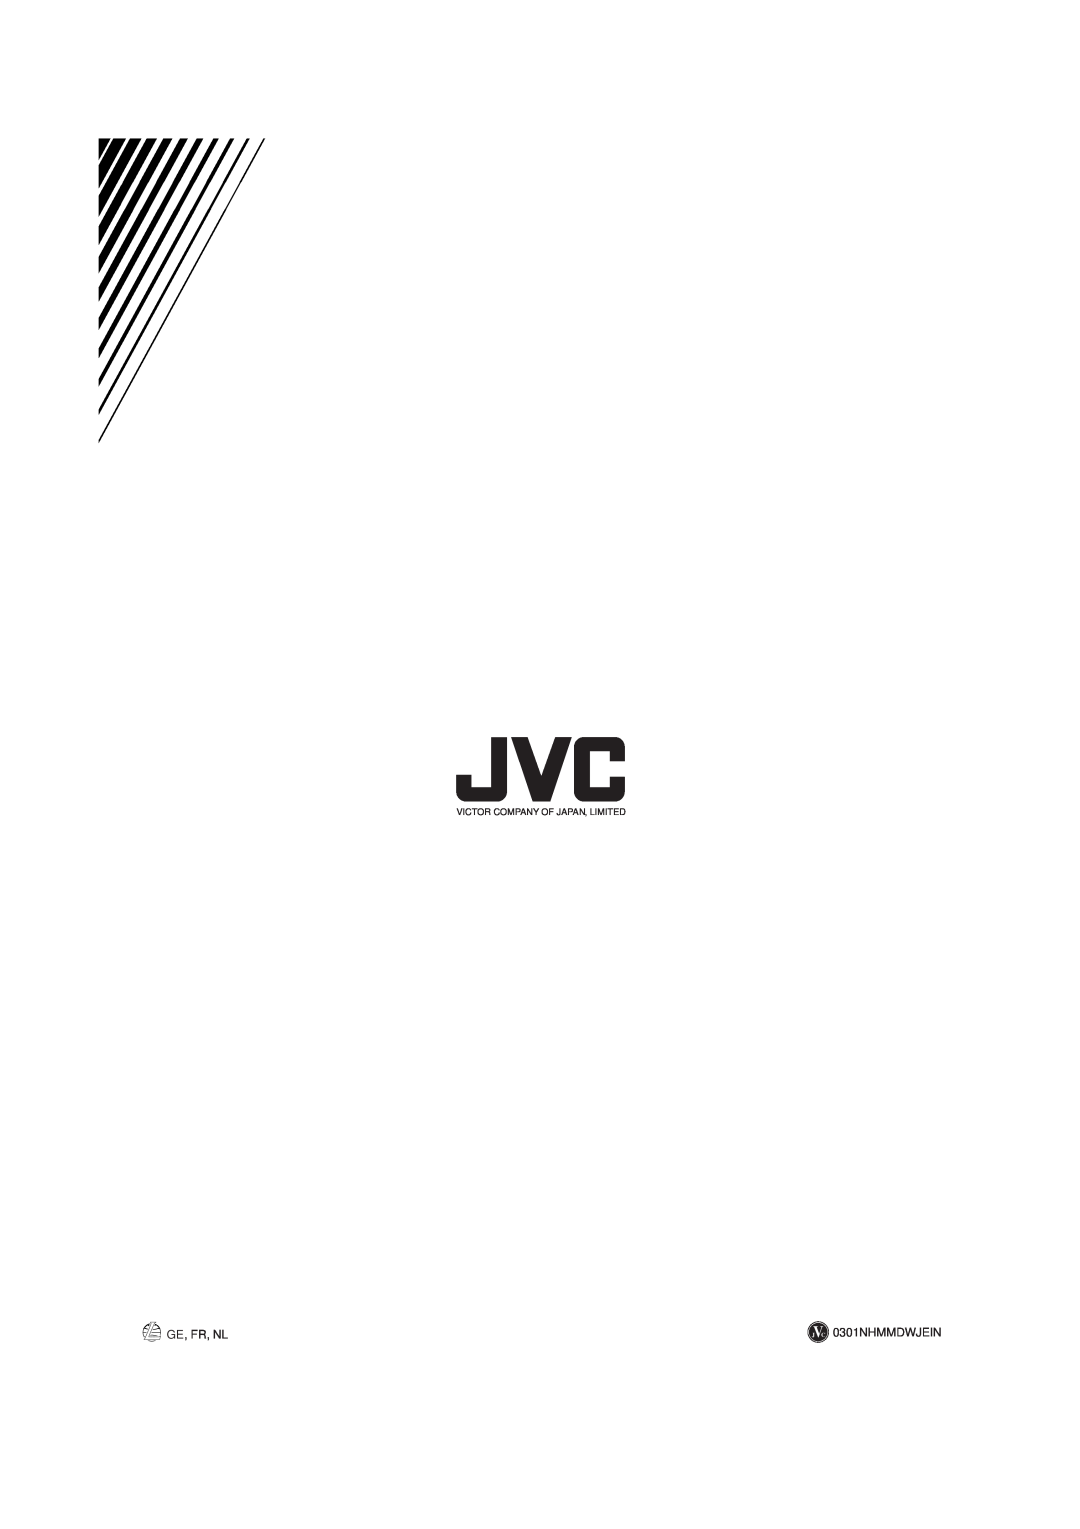 JVC RX-6010RBK manual Ge, Fr, Nl, J C 0301NHMMDWJEIN, Victor Company Of Japan, Limited 